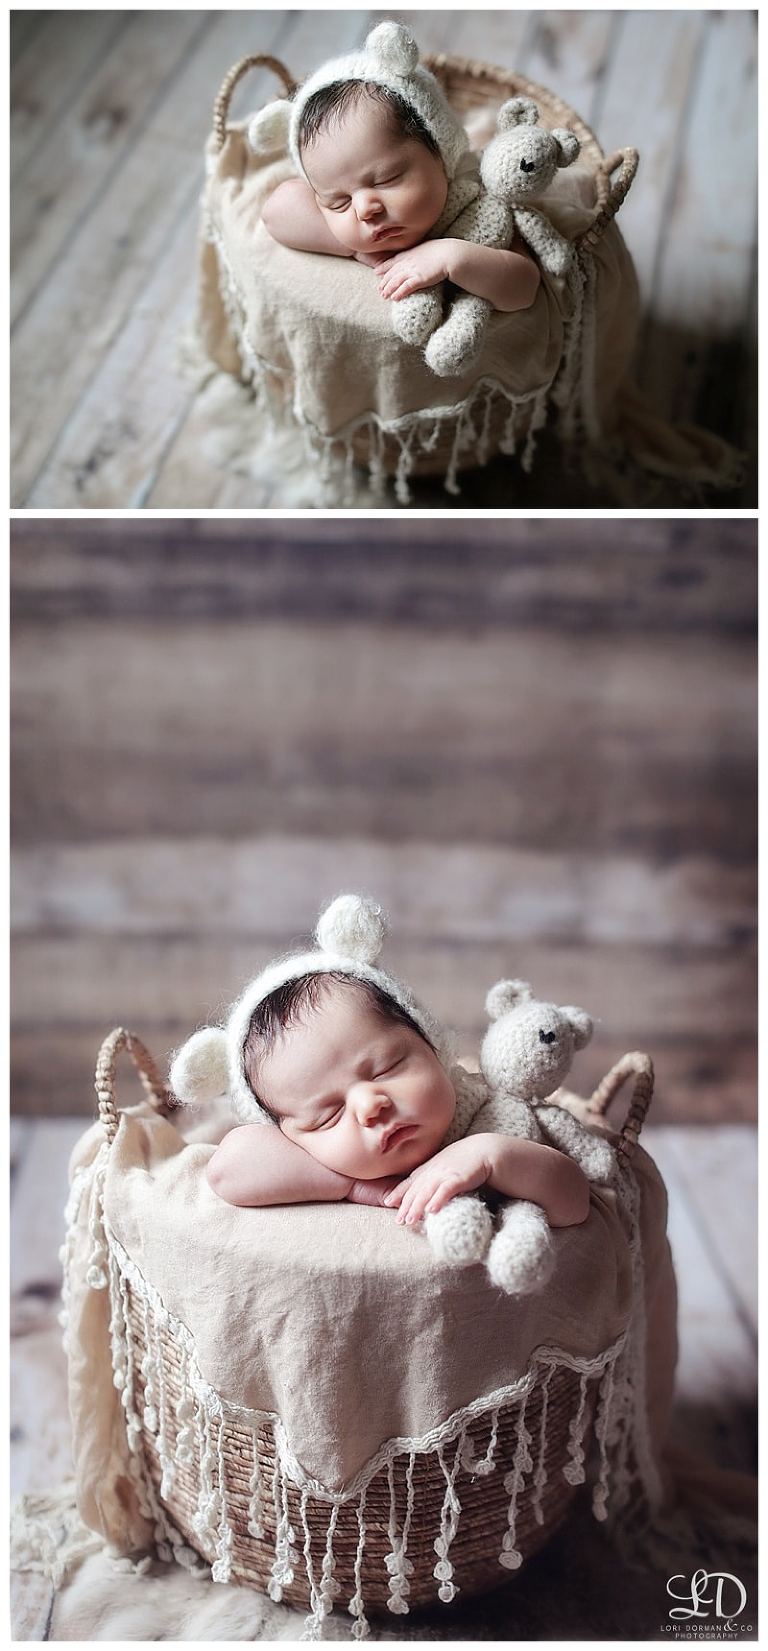 lori dorman photography-newborn photography-newborn photographer-baby photography-baby photographer-Los Angeles newborn photographer_0098.jpg